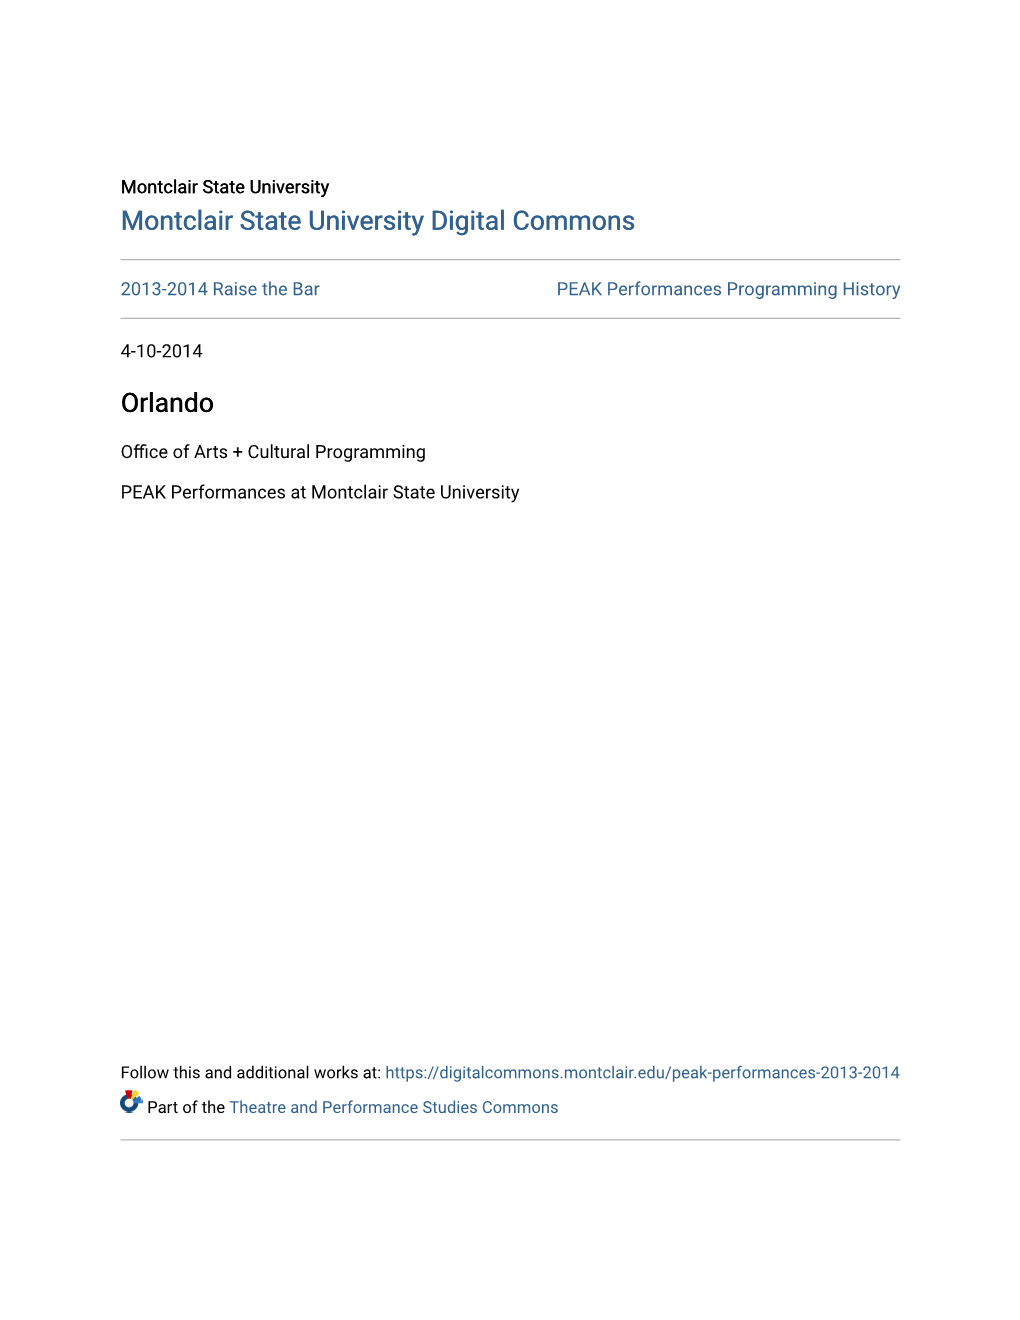 Montclair State University Digital Commons Orlando